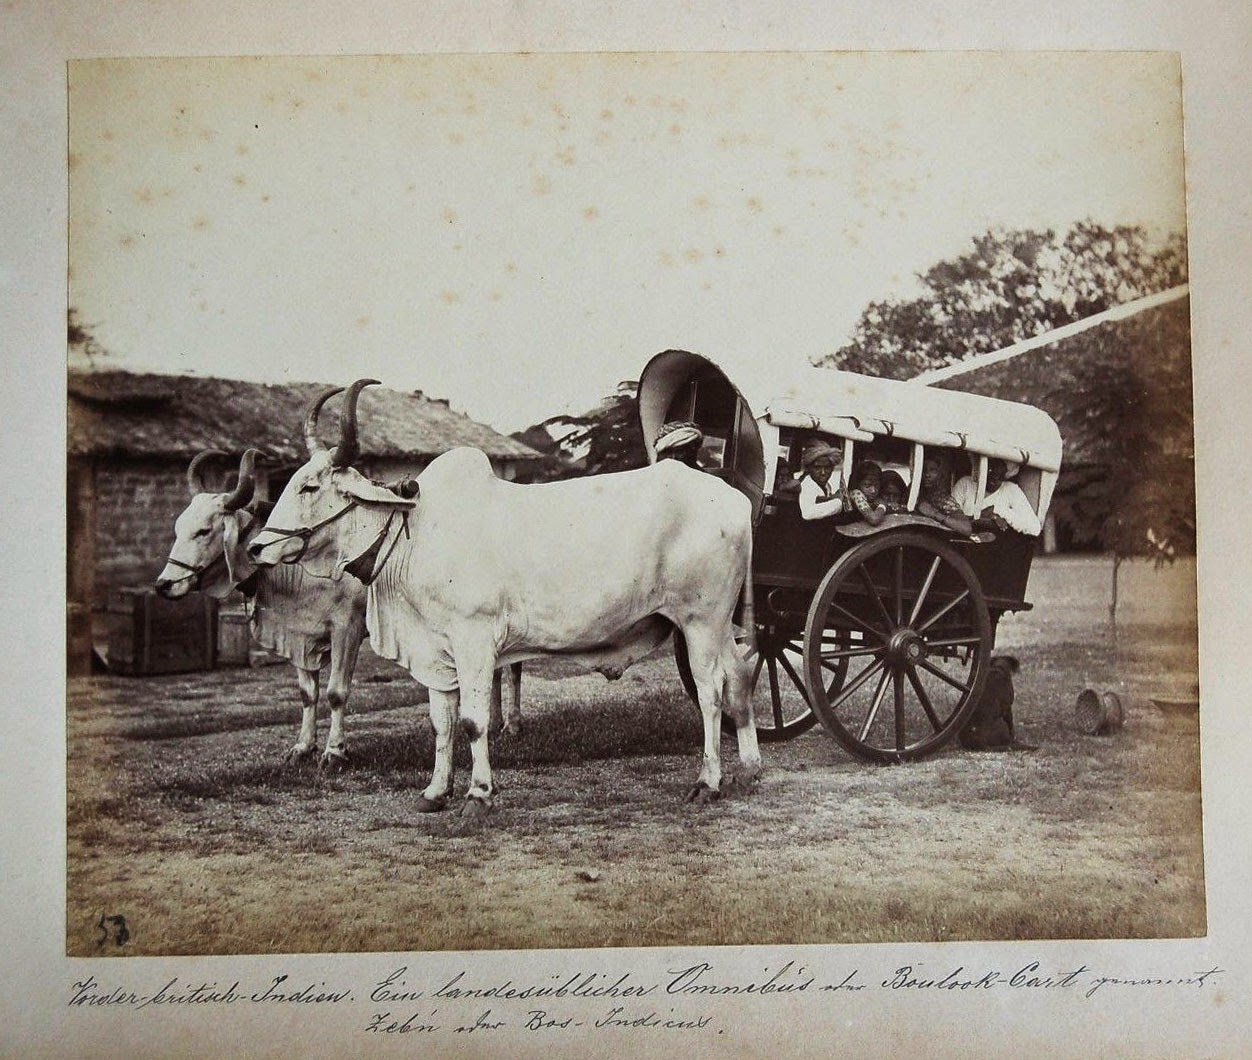 Indian Bullock Cart with Passengers